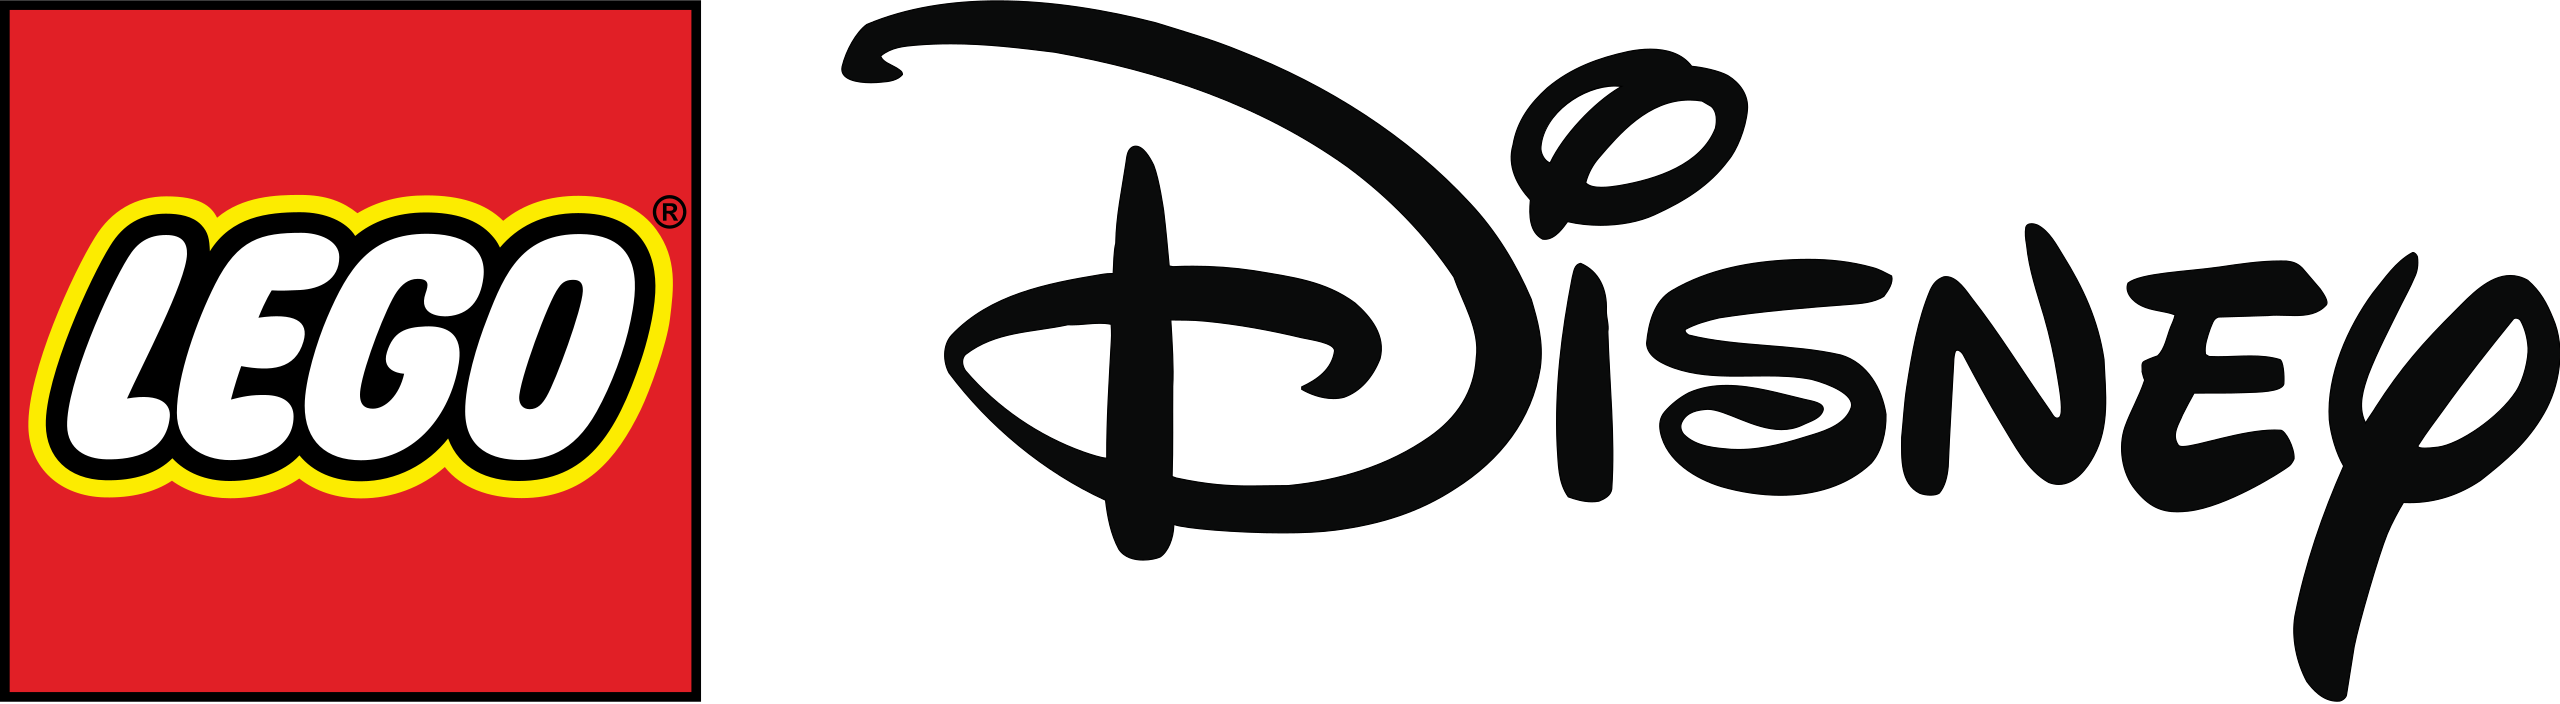 Disney | Brickipedia | Fandom